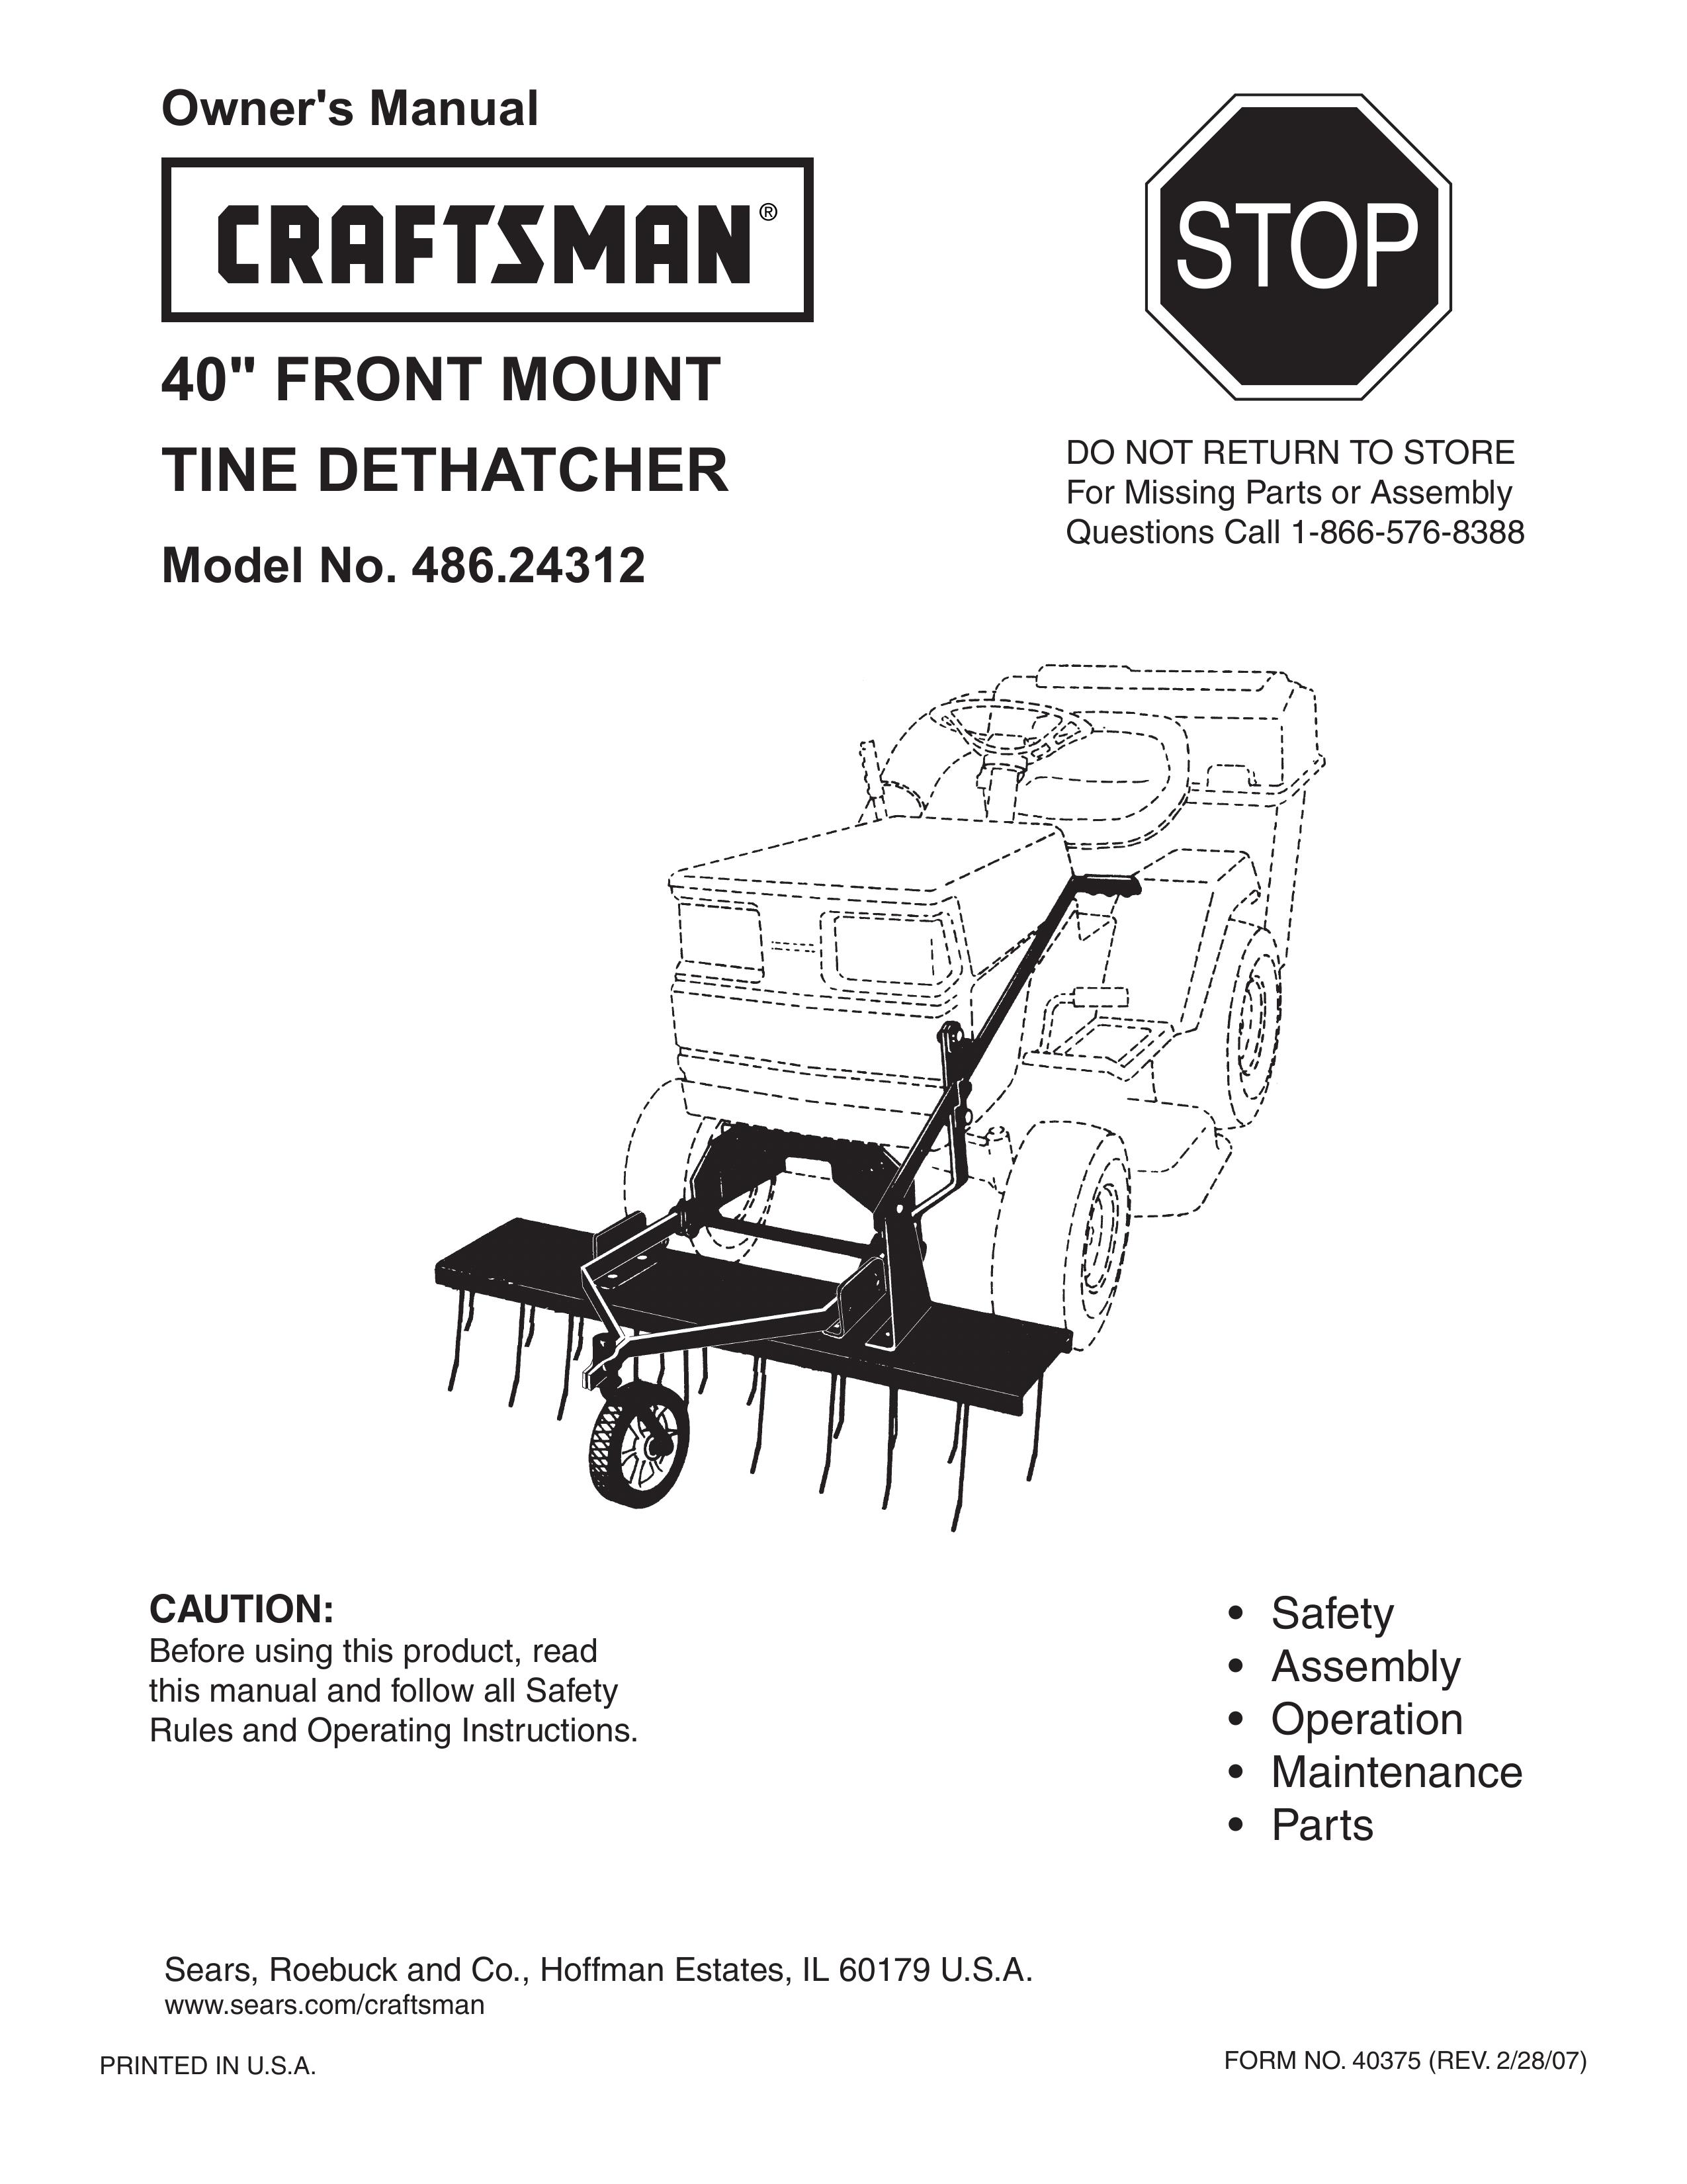 Craftsman 486.24312 Tiller User Manual